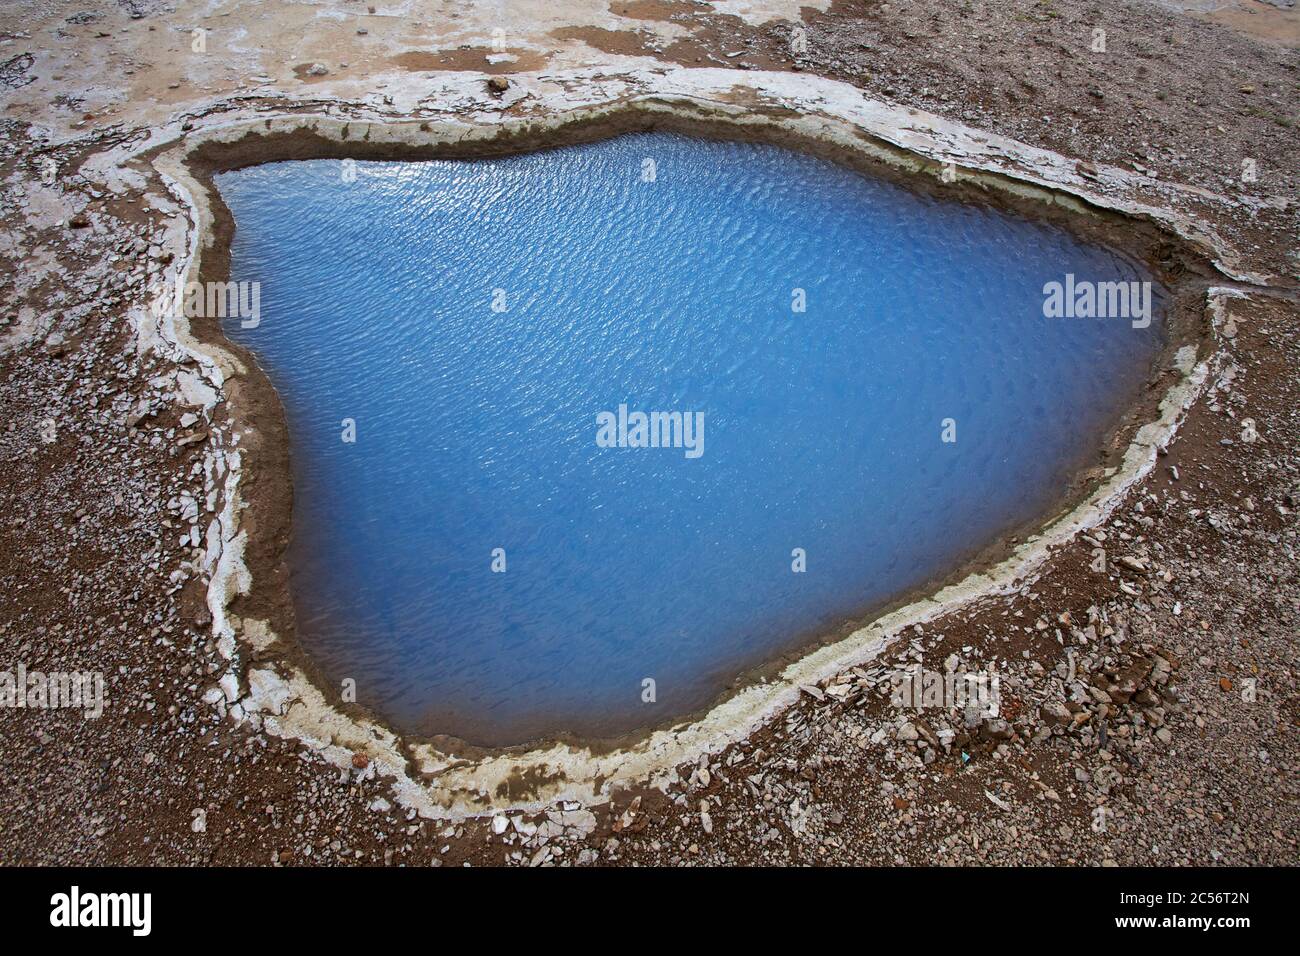 Mattina umore alla sorgente calda 'Bleesi', il cui colore blu proviene da terra diatomacea dissolta. Foto Stock